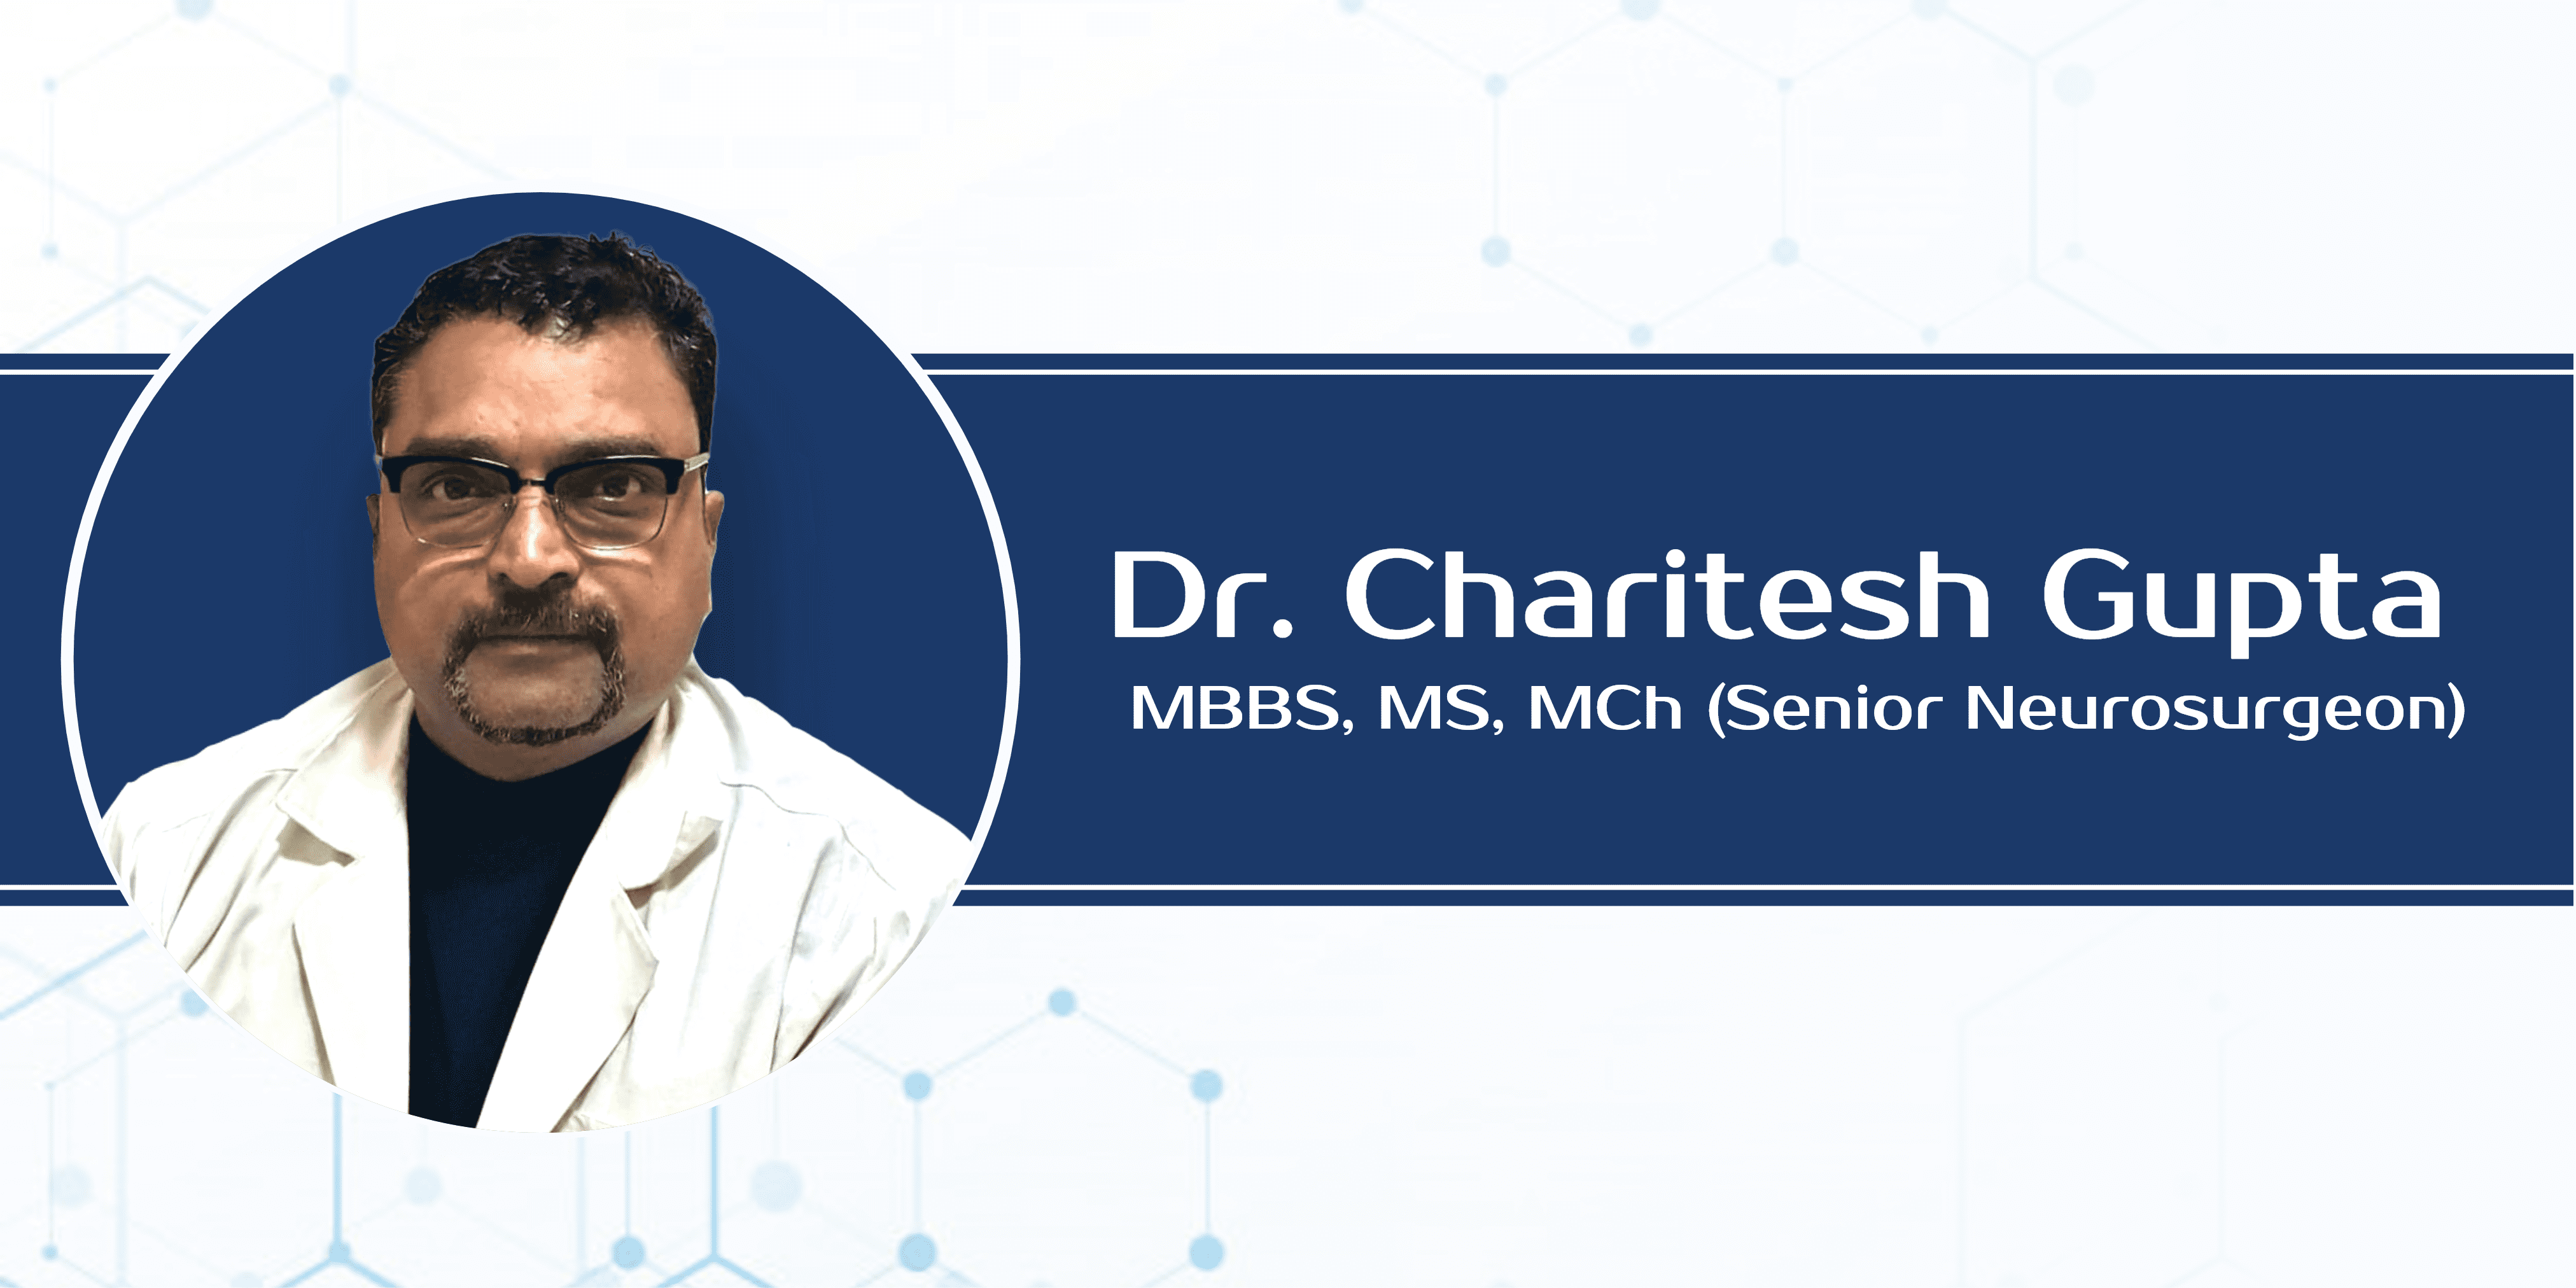 Dr. Charitesh Gupta MS, MCh (Senior Neurosurgeon)